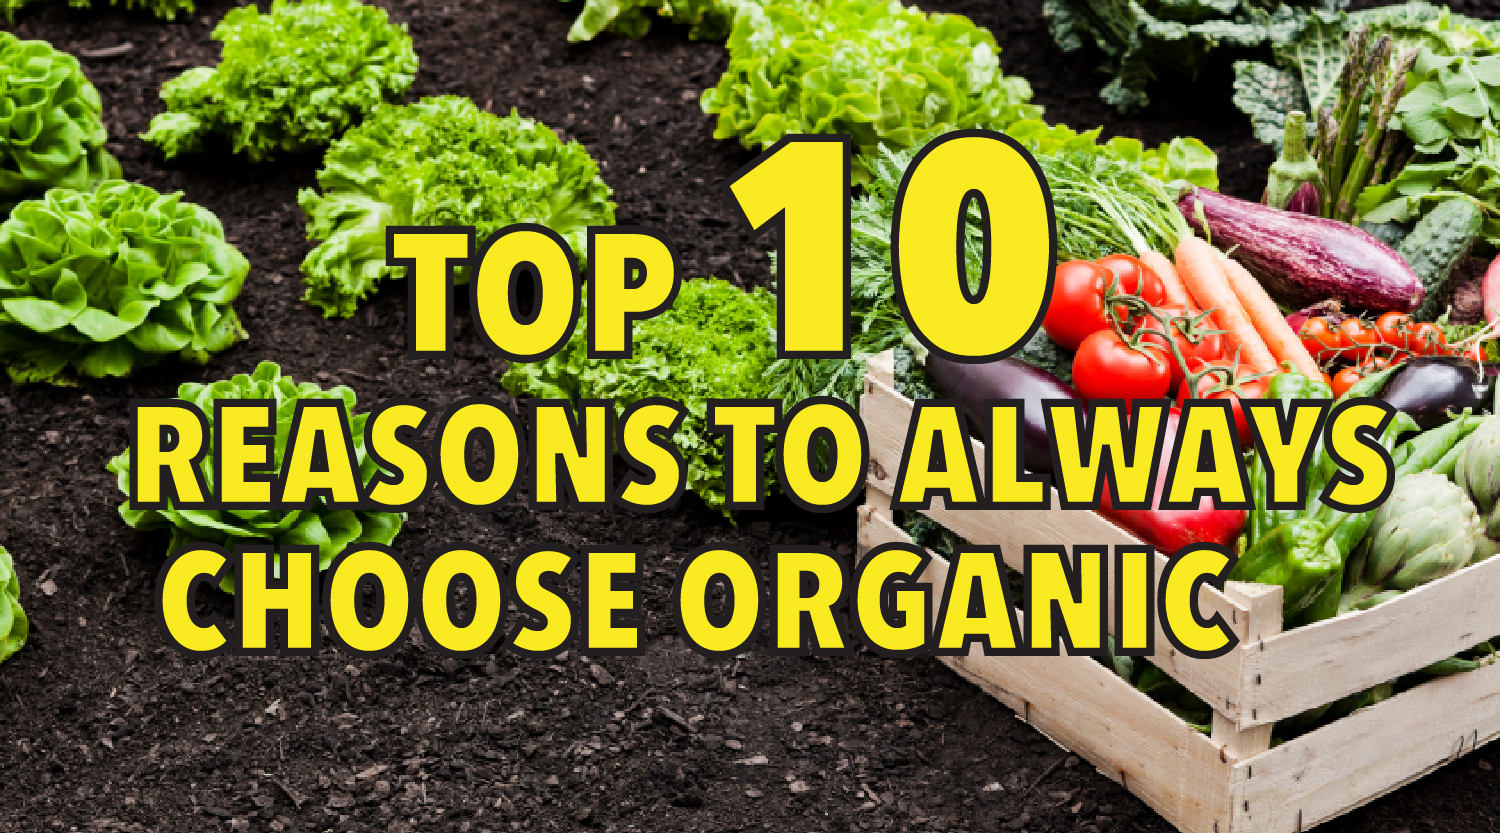 Top 10 reasons to always choose organic